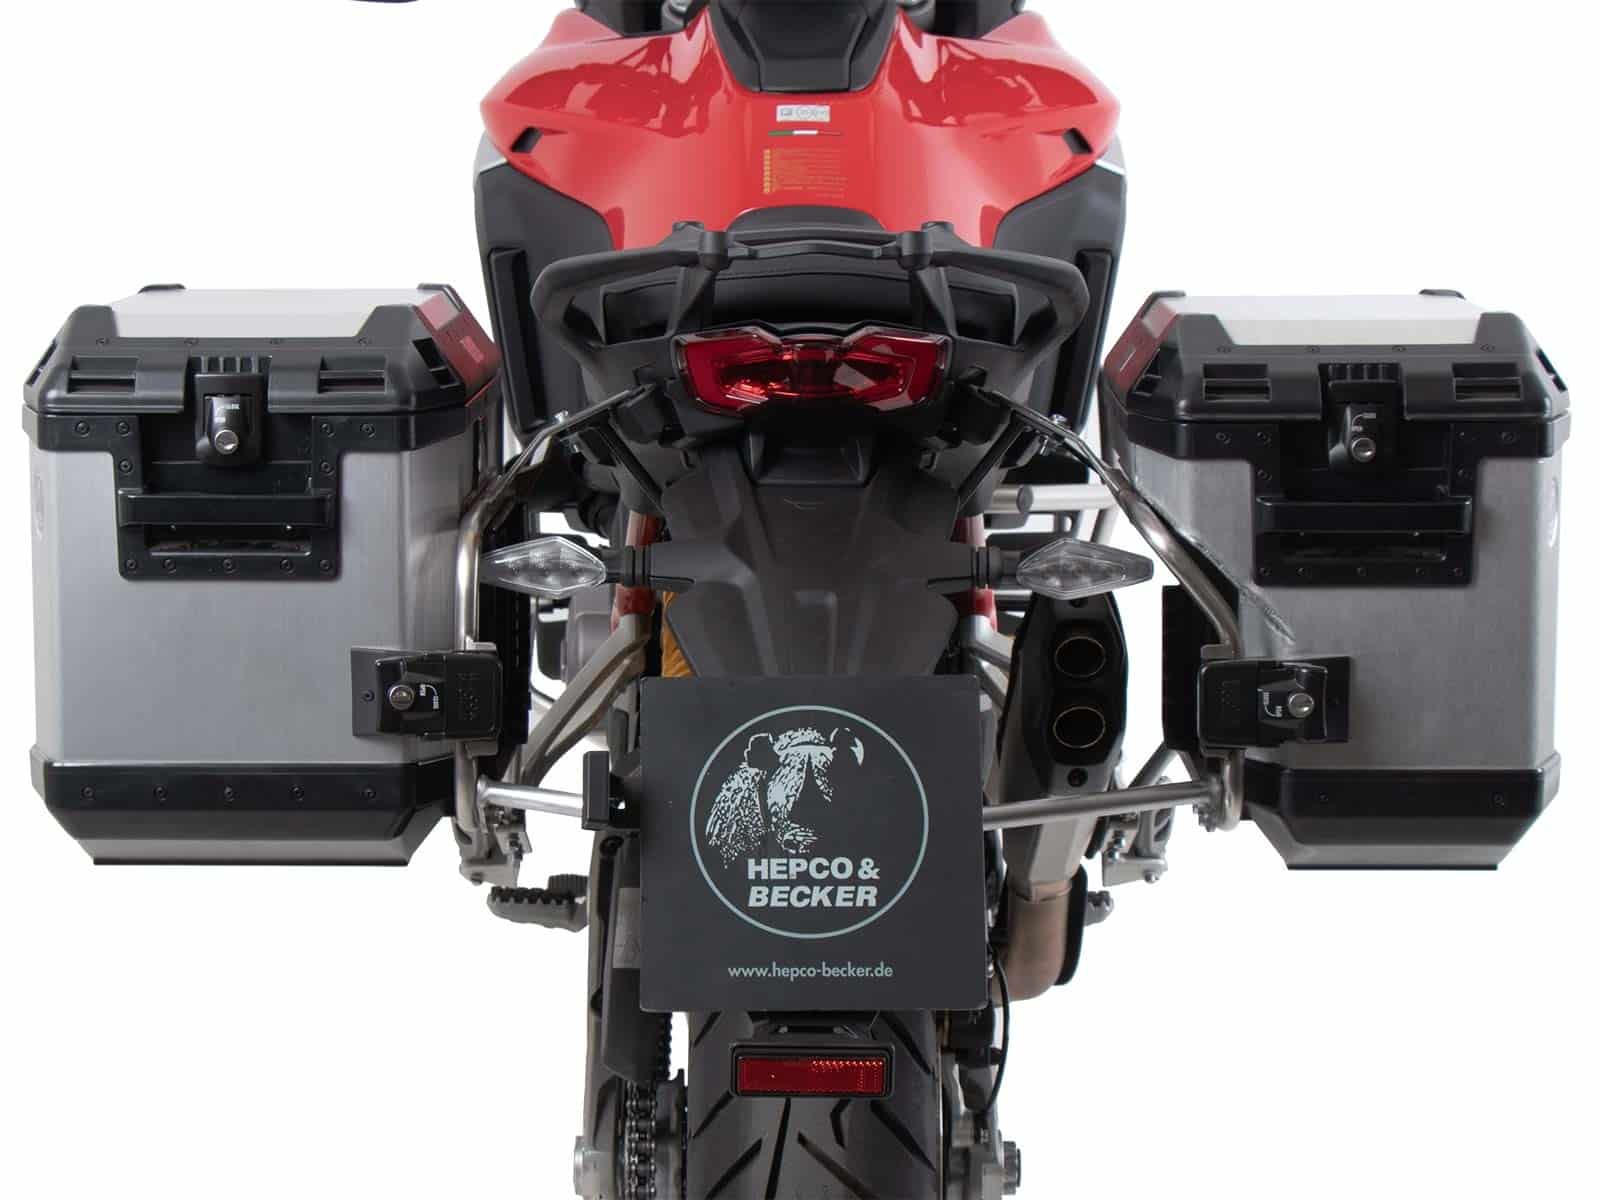 Becker Ducati Multistrada V4/S/S Sport Pannier Frames BY HEPCO & BECKER From 2021 